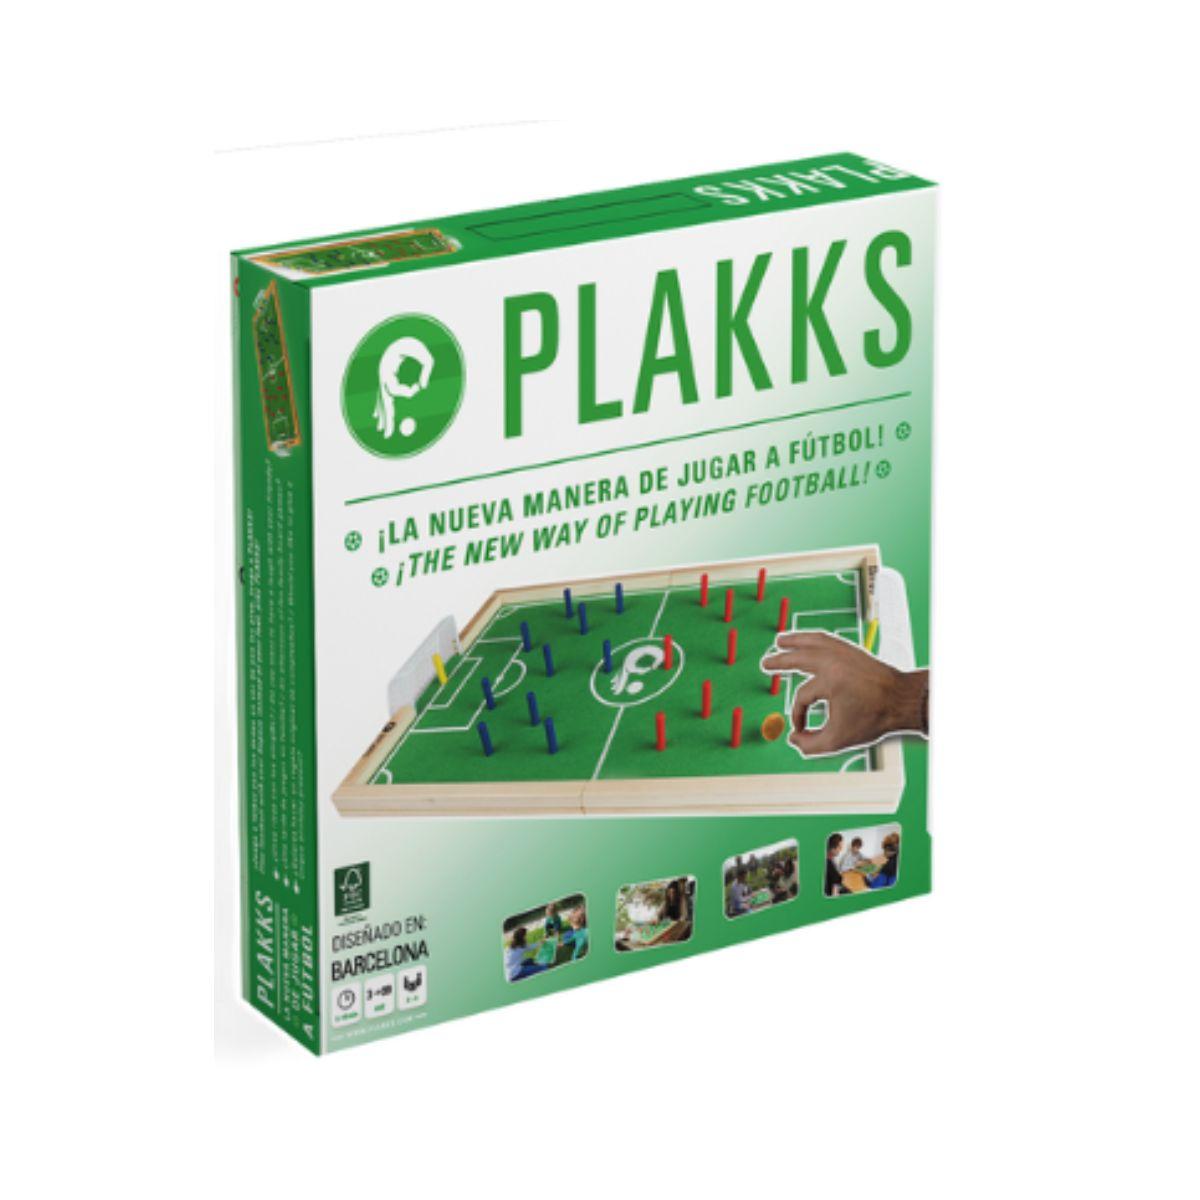 Plakks Football Field